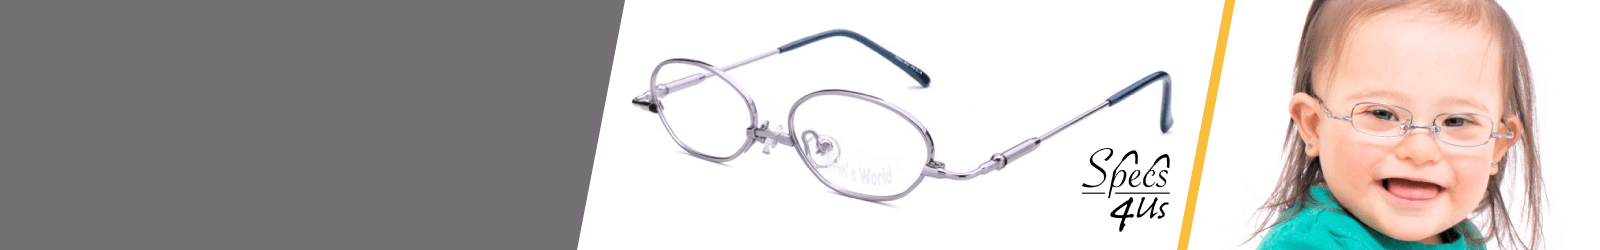 Specs4us Low Nose Bridge Glasses for Kids